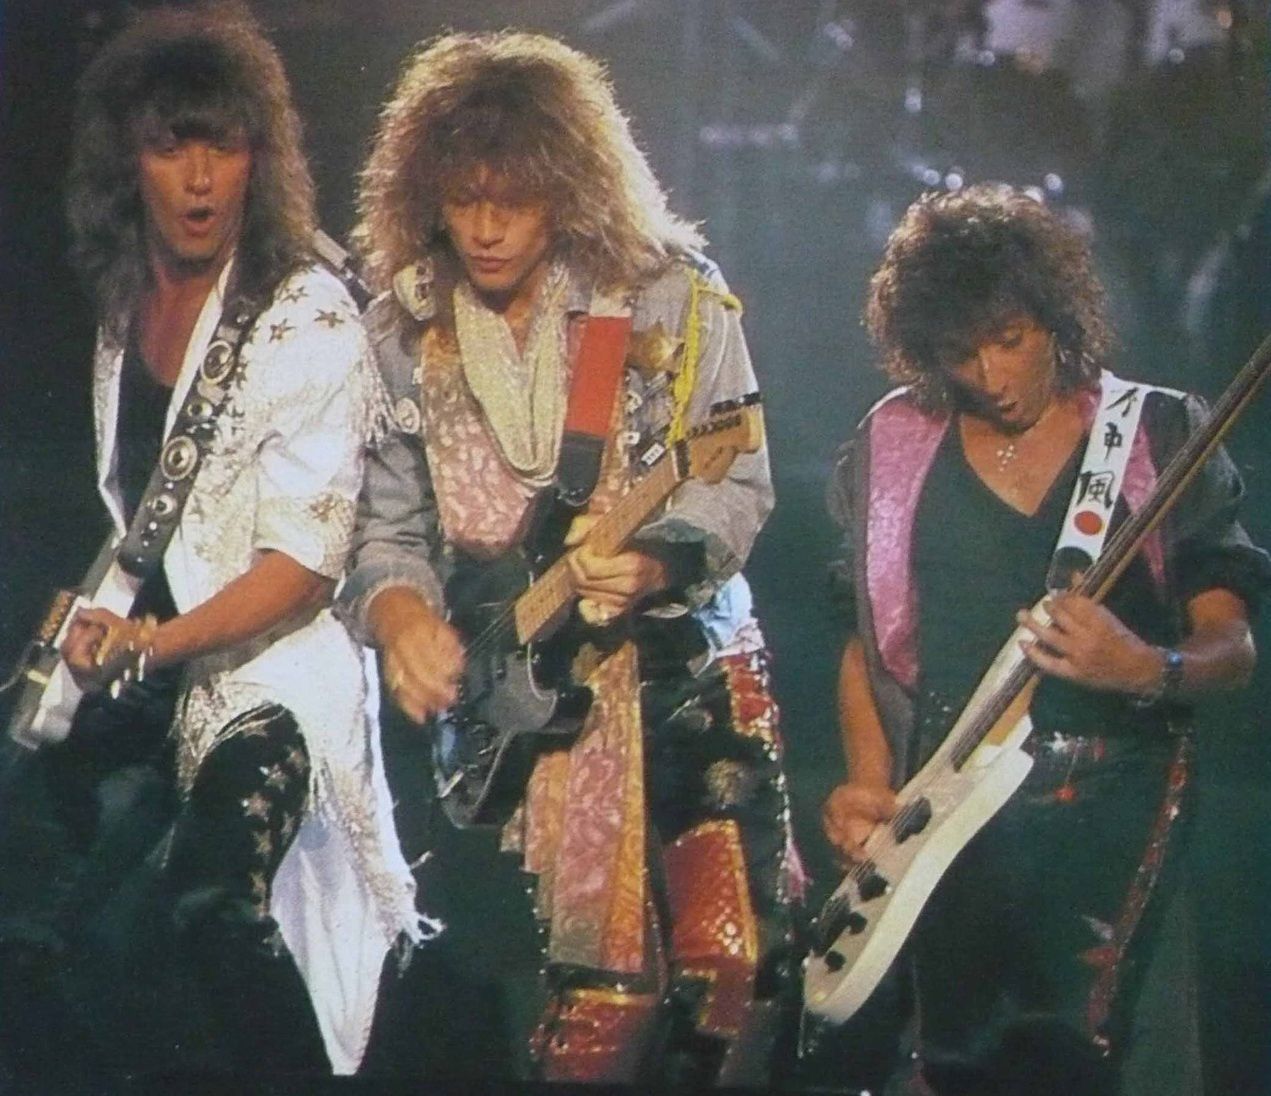 Alec John Such, Ritchie Sambora and Jon Bon Jovi (Bon Jovi)